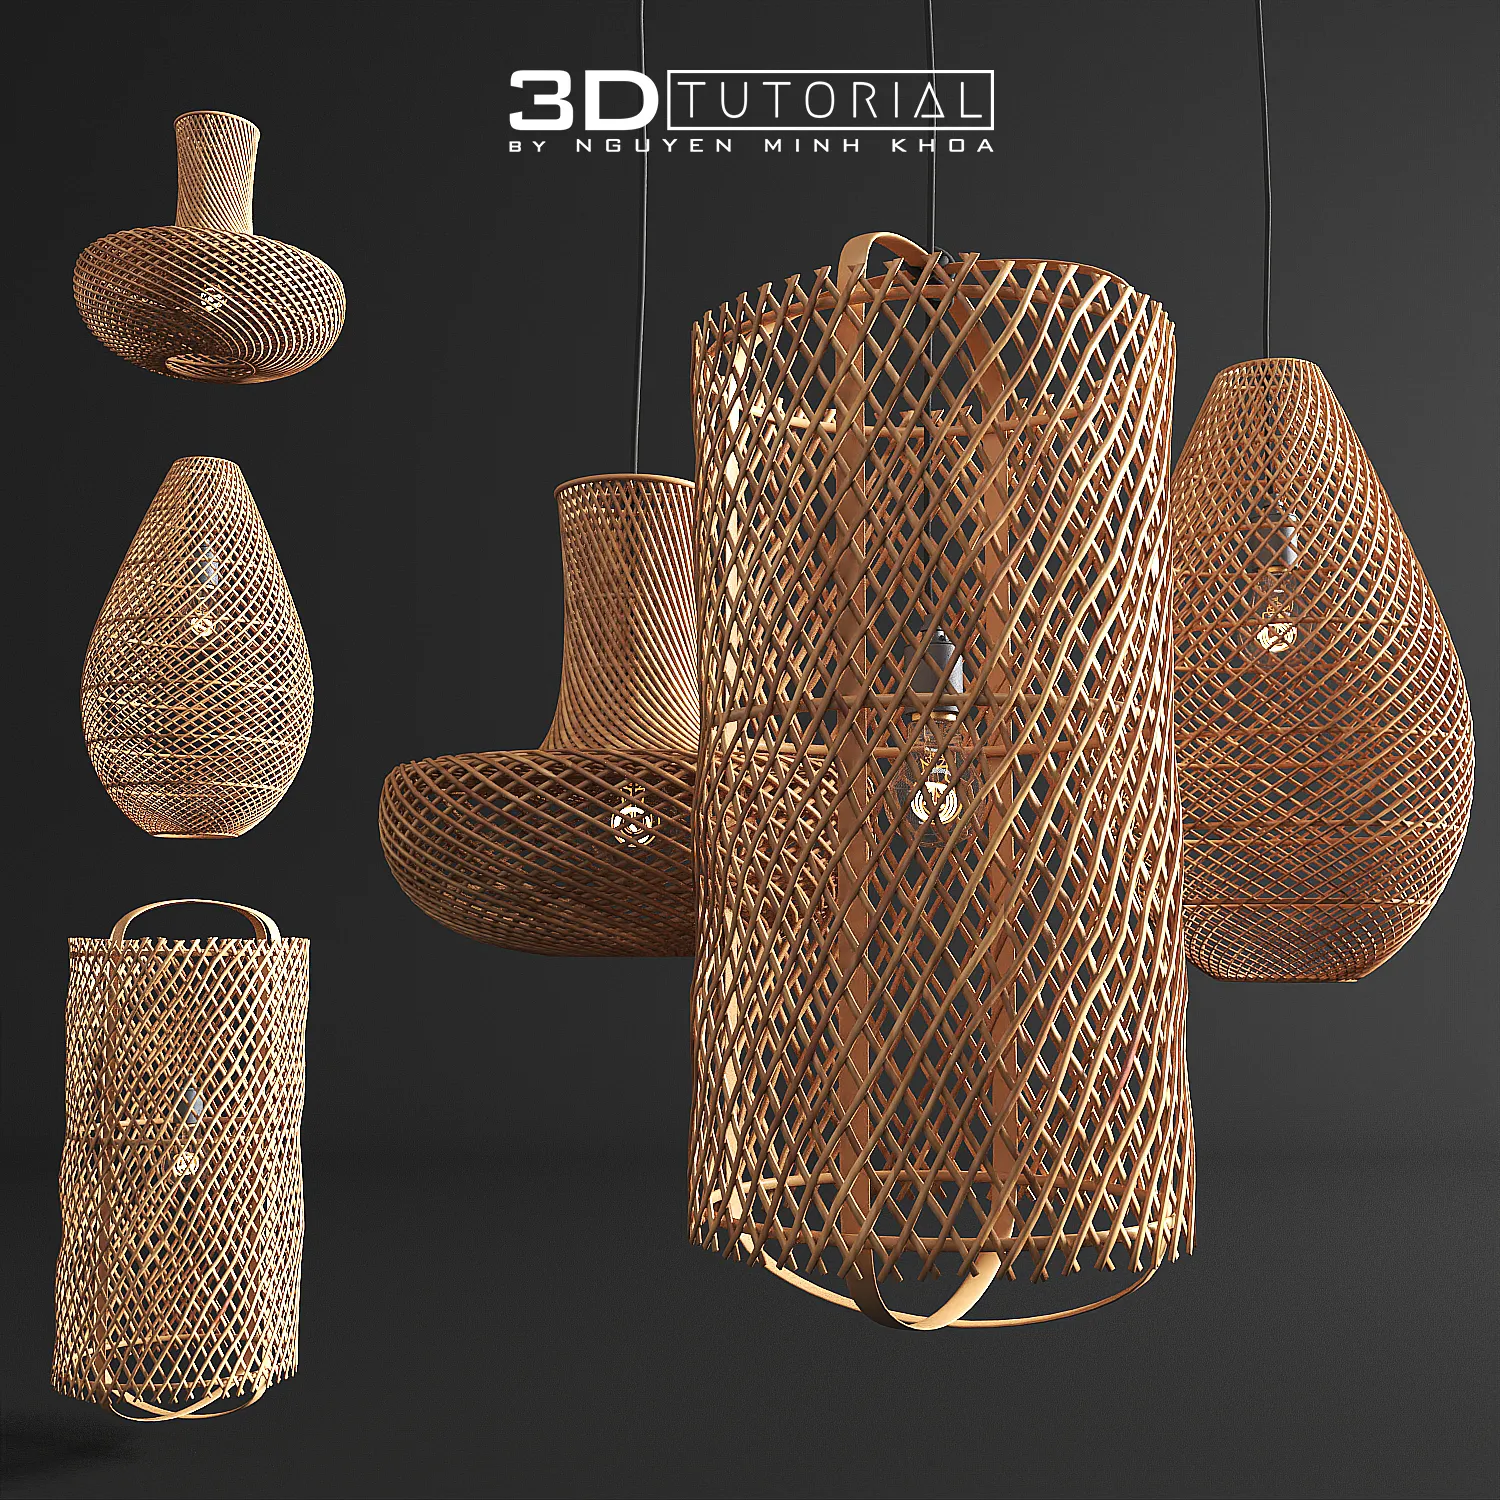 FURNITURE 3D MODELS – Rattan lamp 1 modelbyNguyenMinhKhoa